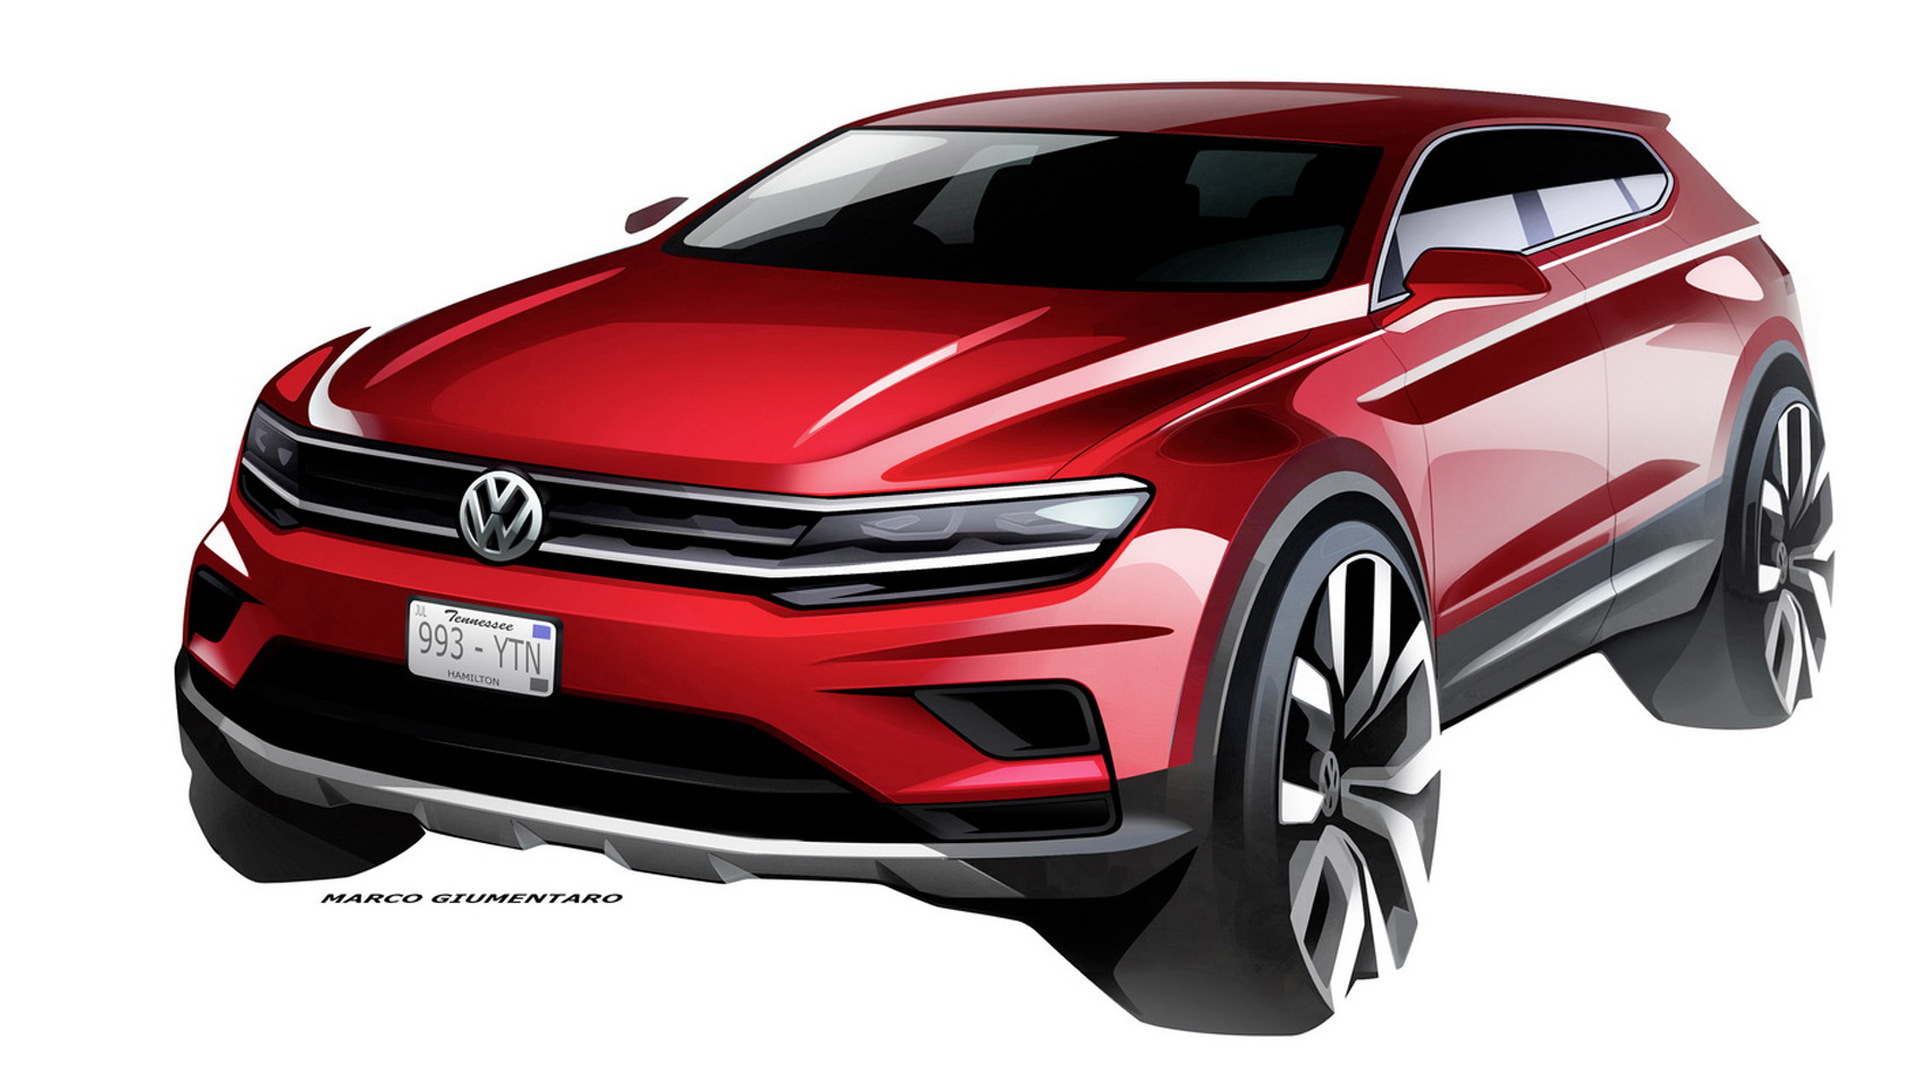 2018 Volkswagen Tiguan Allspace teased ahead of 2017 Detroit auto show